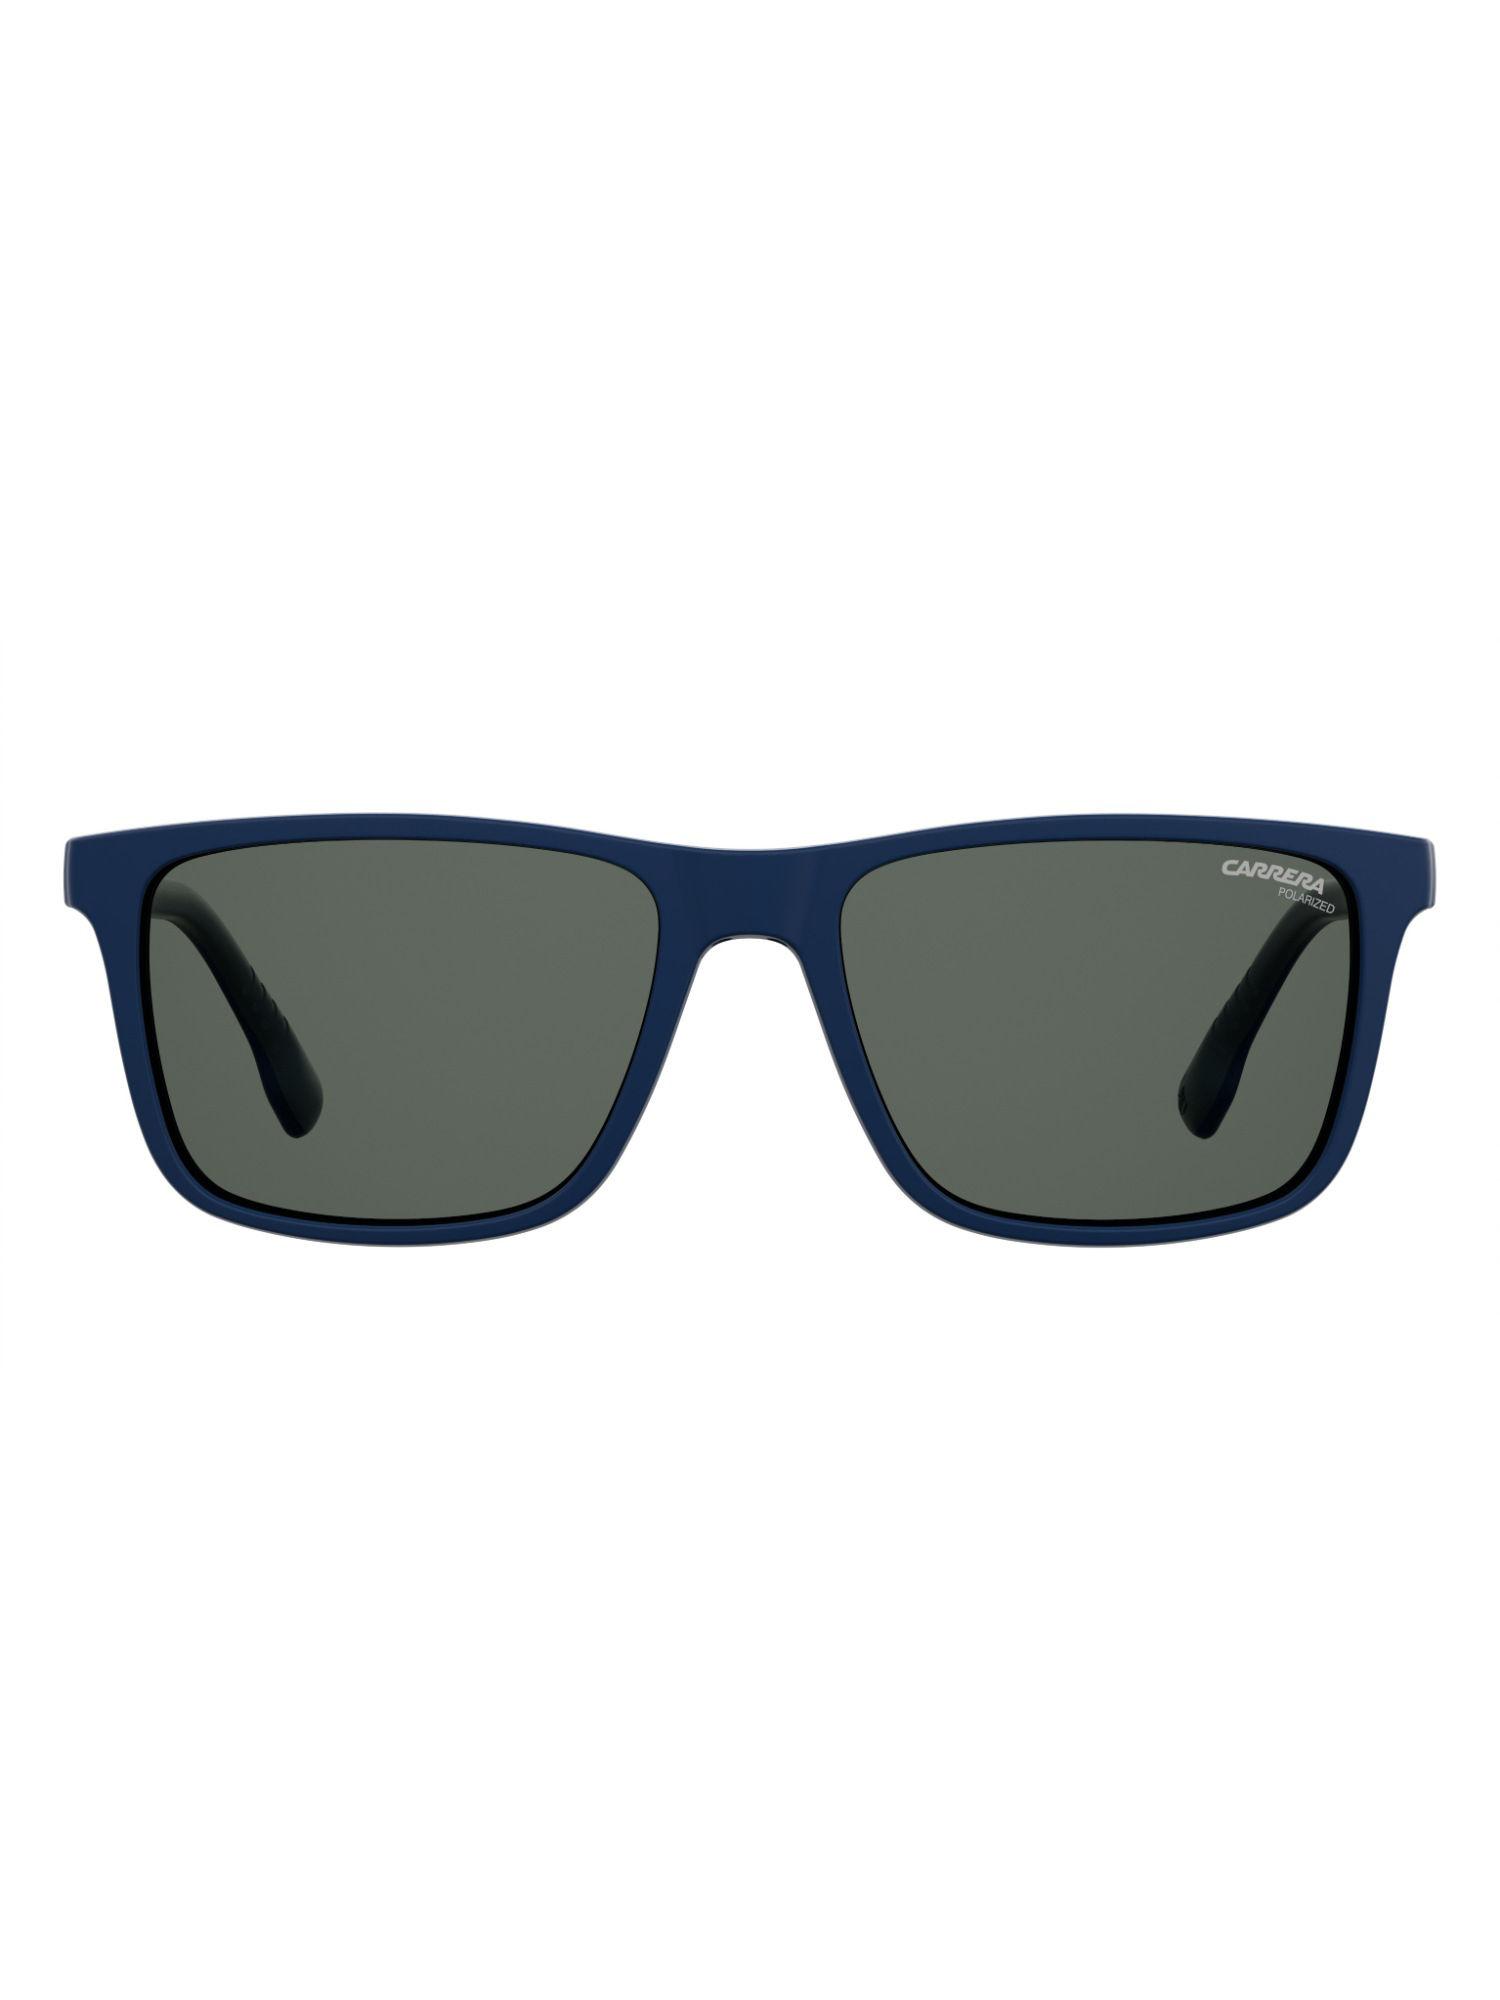 sunglasses grey polarized lens rectangular sunglass matt blue frame